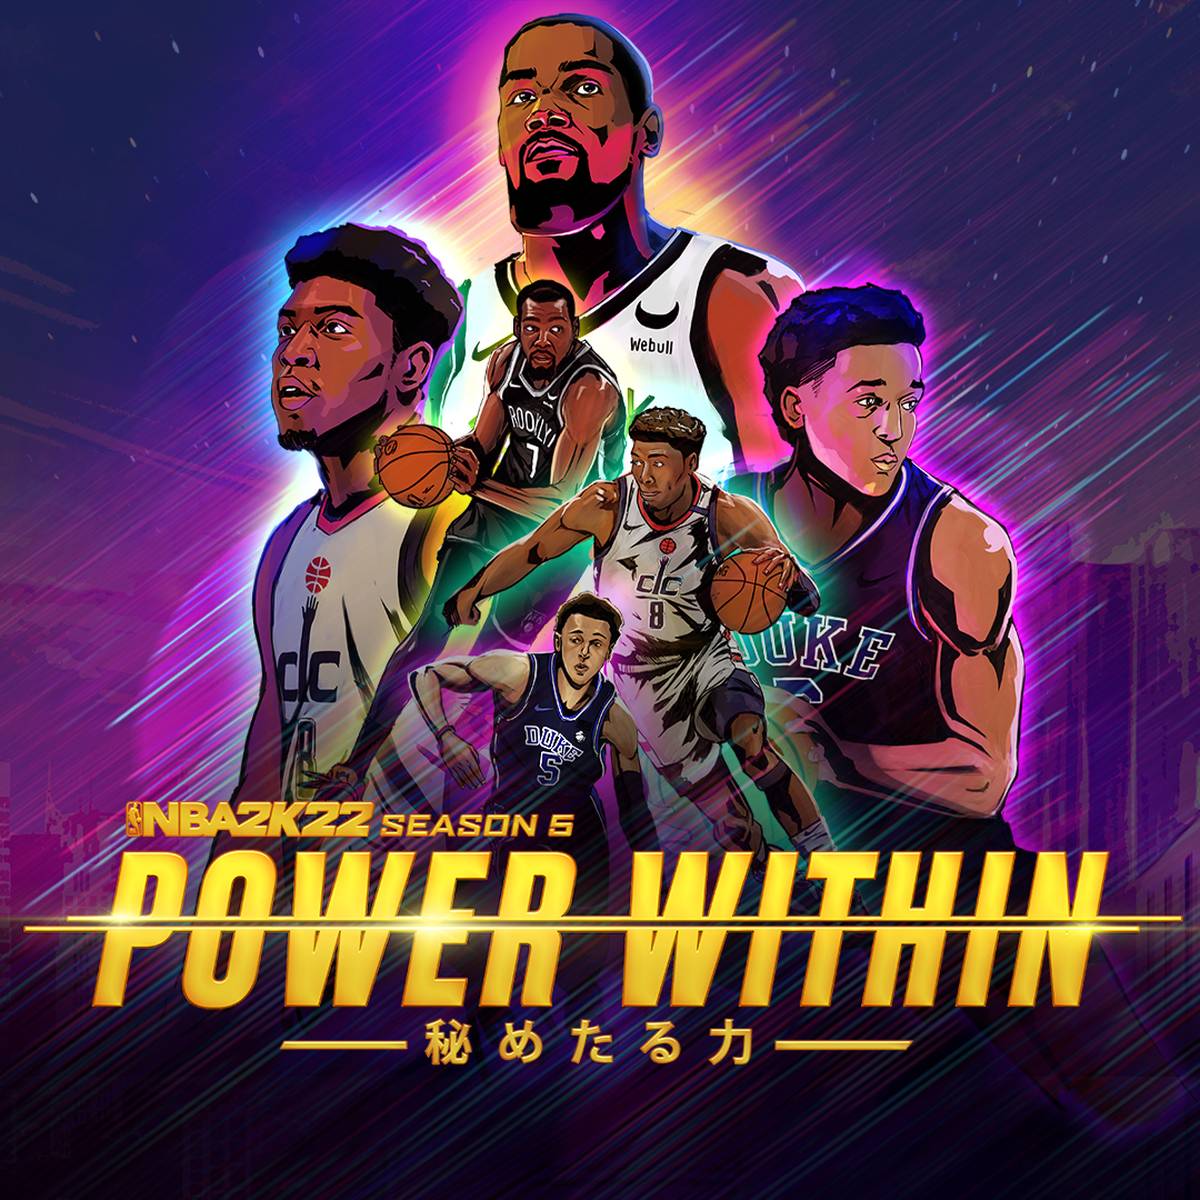 NBA 2K22 Season 5: „Power Within“